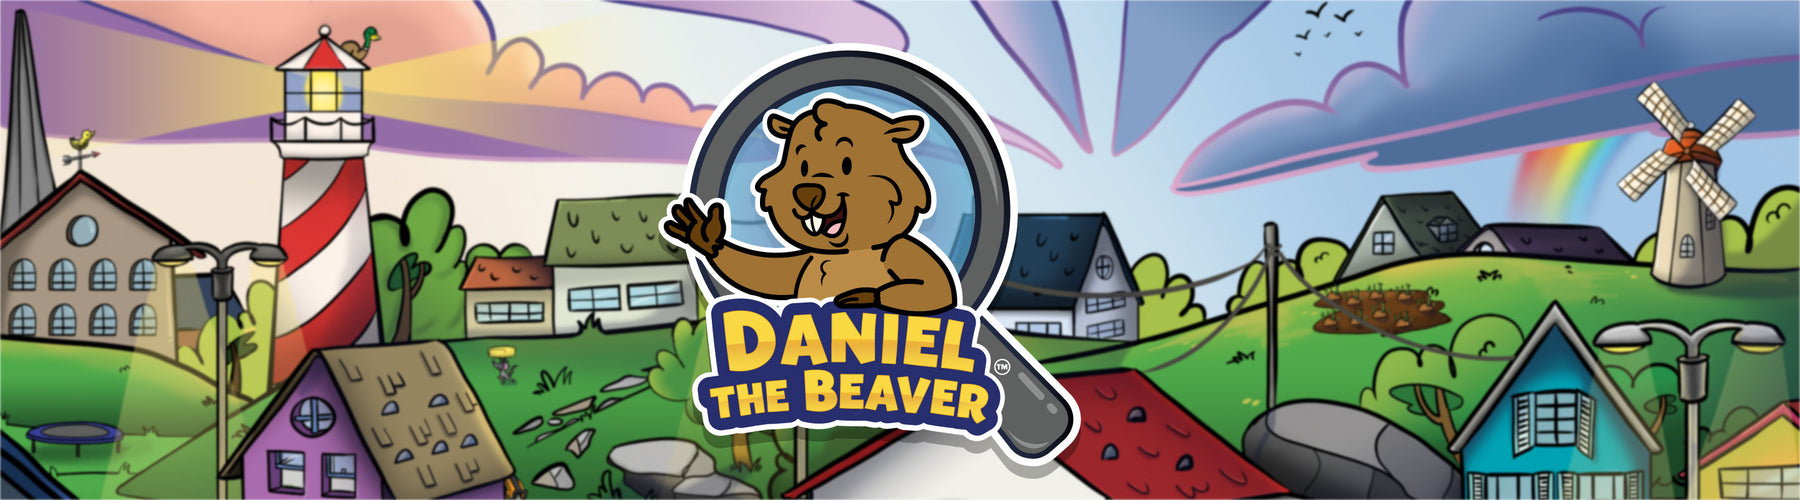 Hello from Daniel the Beaver!